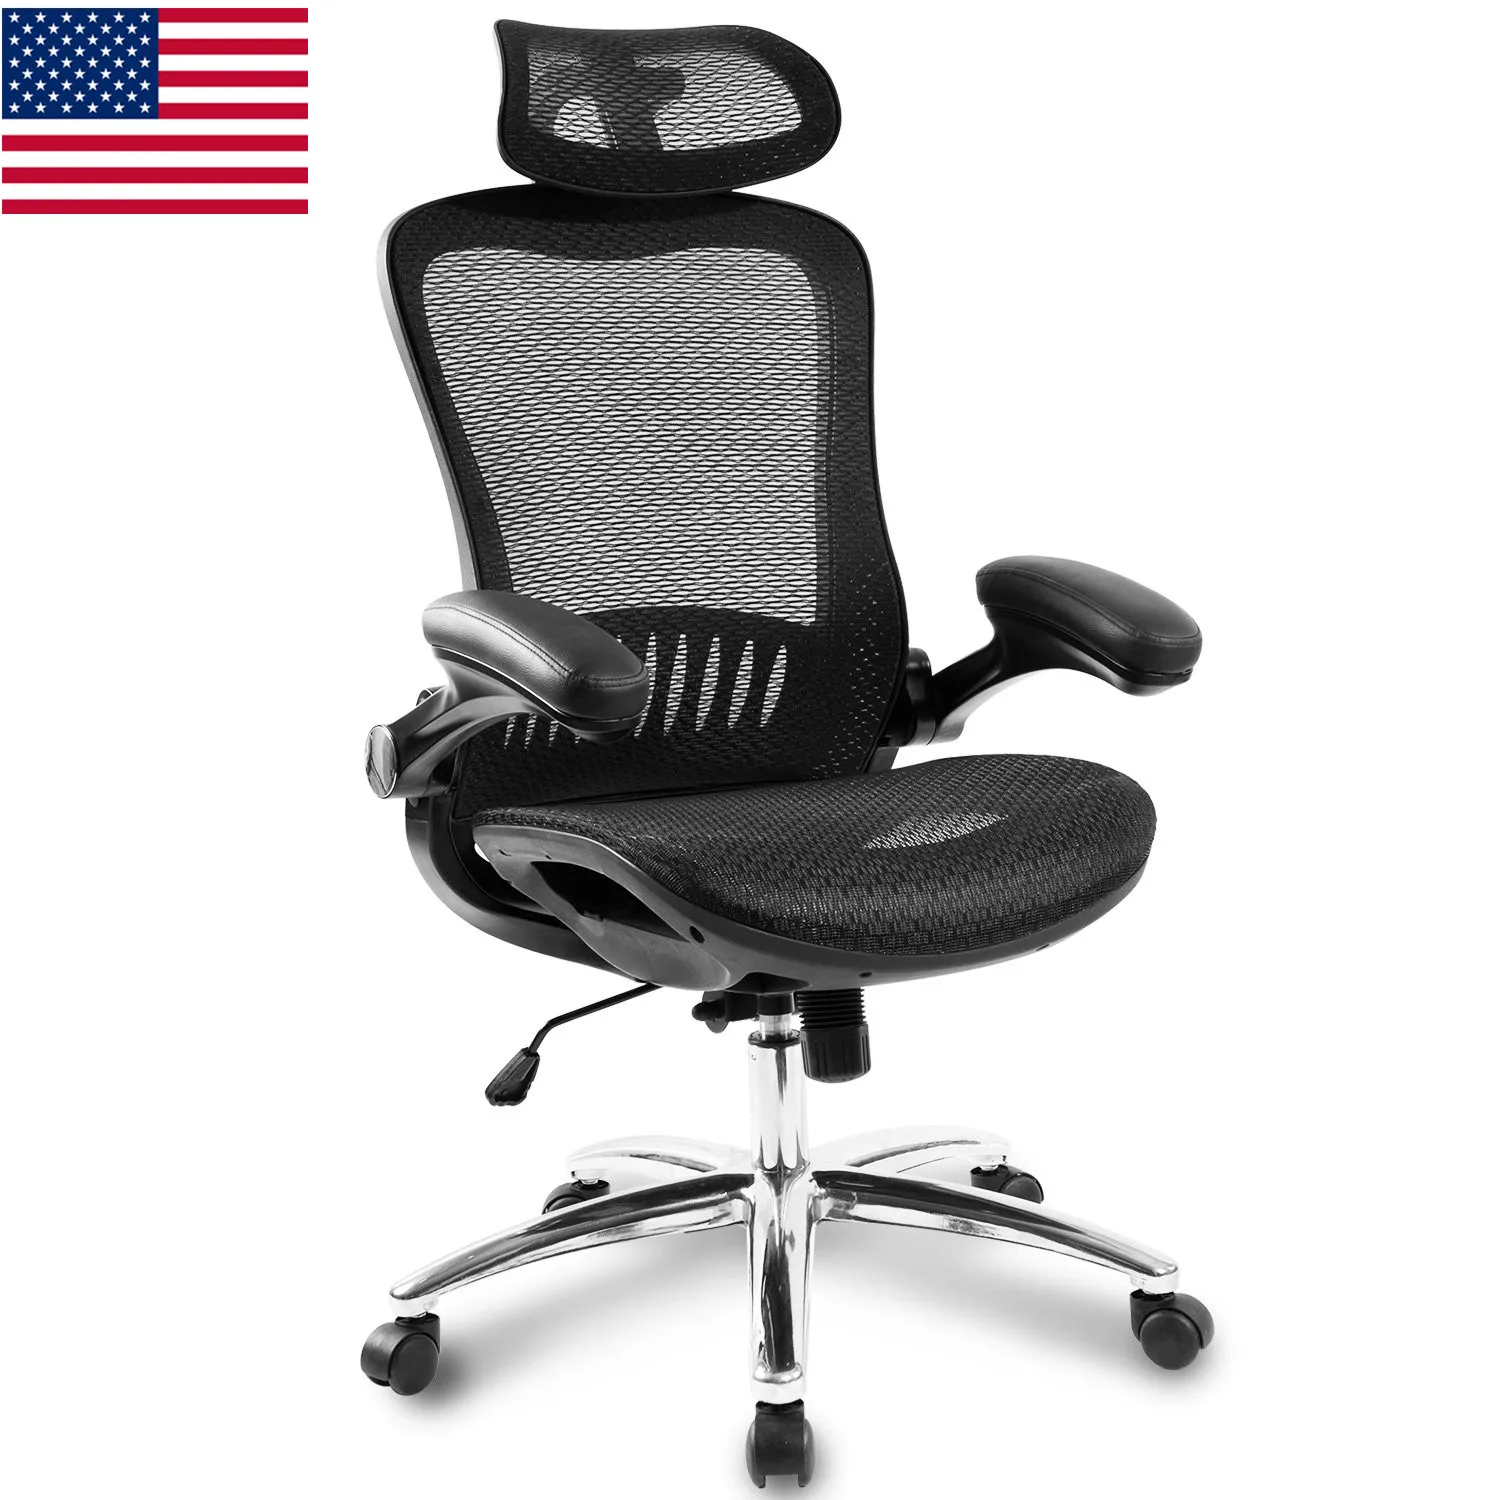 

Ergonomic Mesh Executive Desk Chair Comfortable Reclining Swivel Office Chair, Black